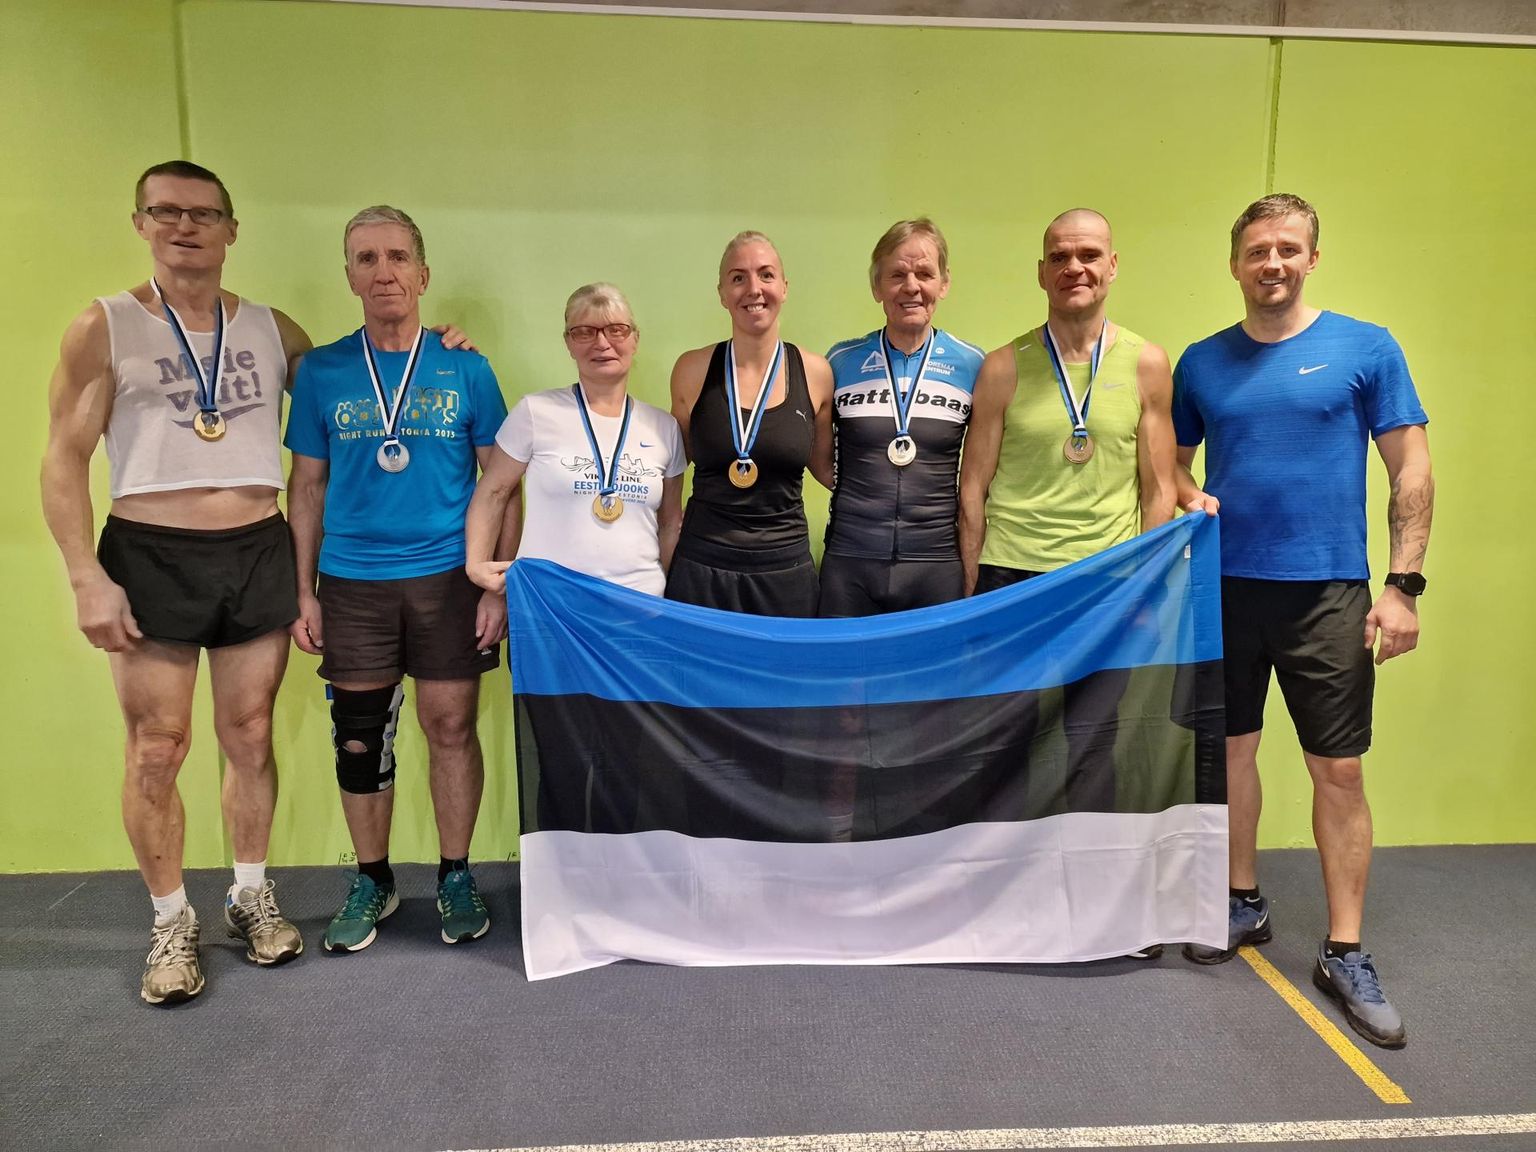 Väikemaarjalastest medalistid (vasakult) Ants Einsalu, Bruno Münter, Ira Münter, Annika Deedin, Väino Stoltsen, Kalle Piirioja ja M40+ klassi viies Olavi Eerma.

 

 

 